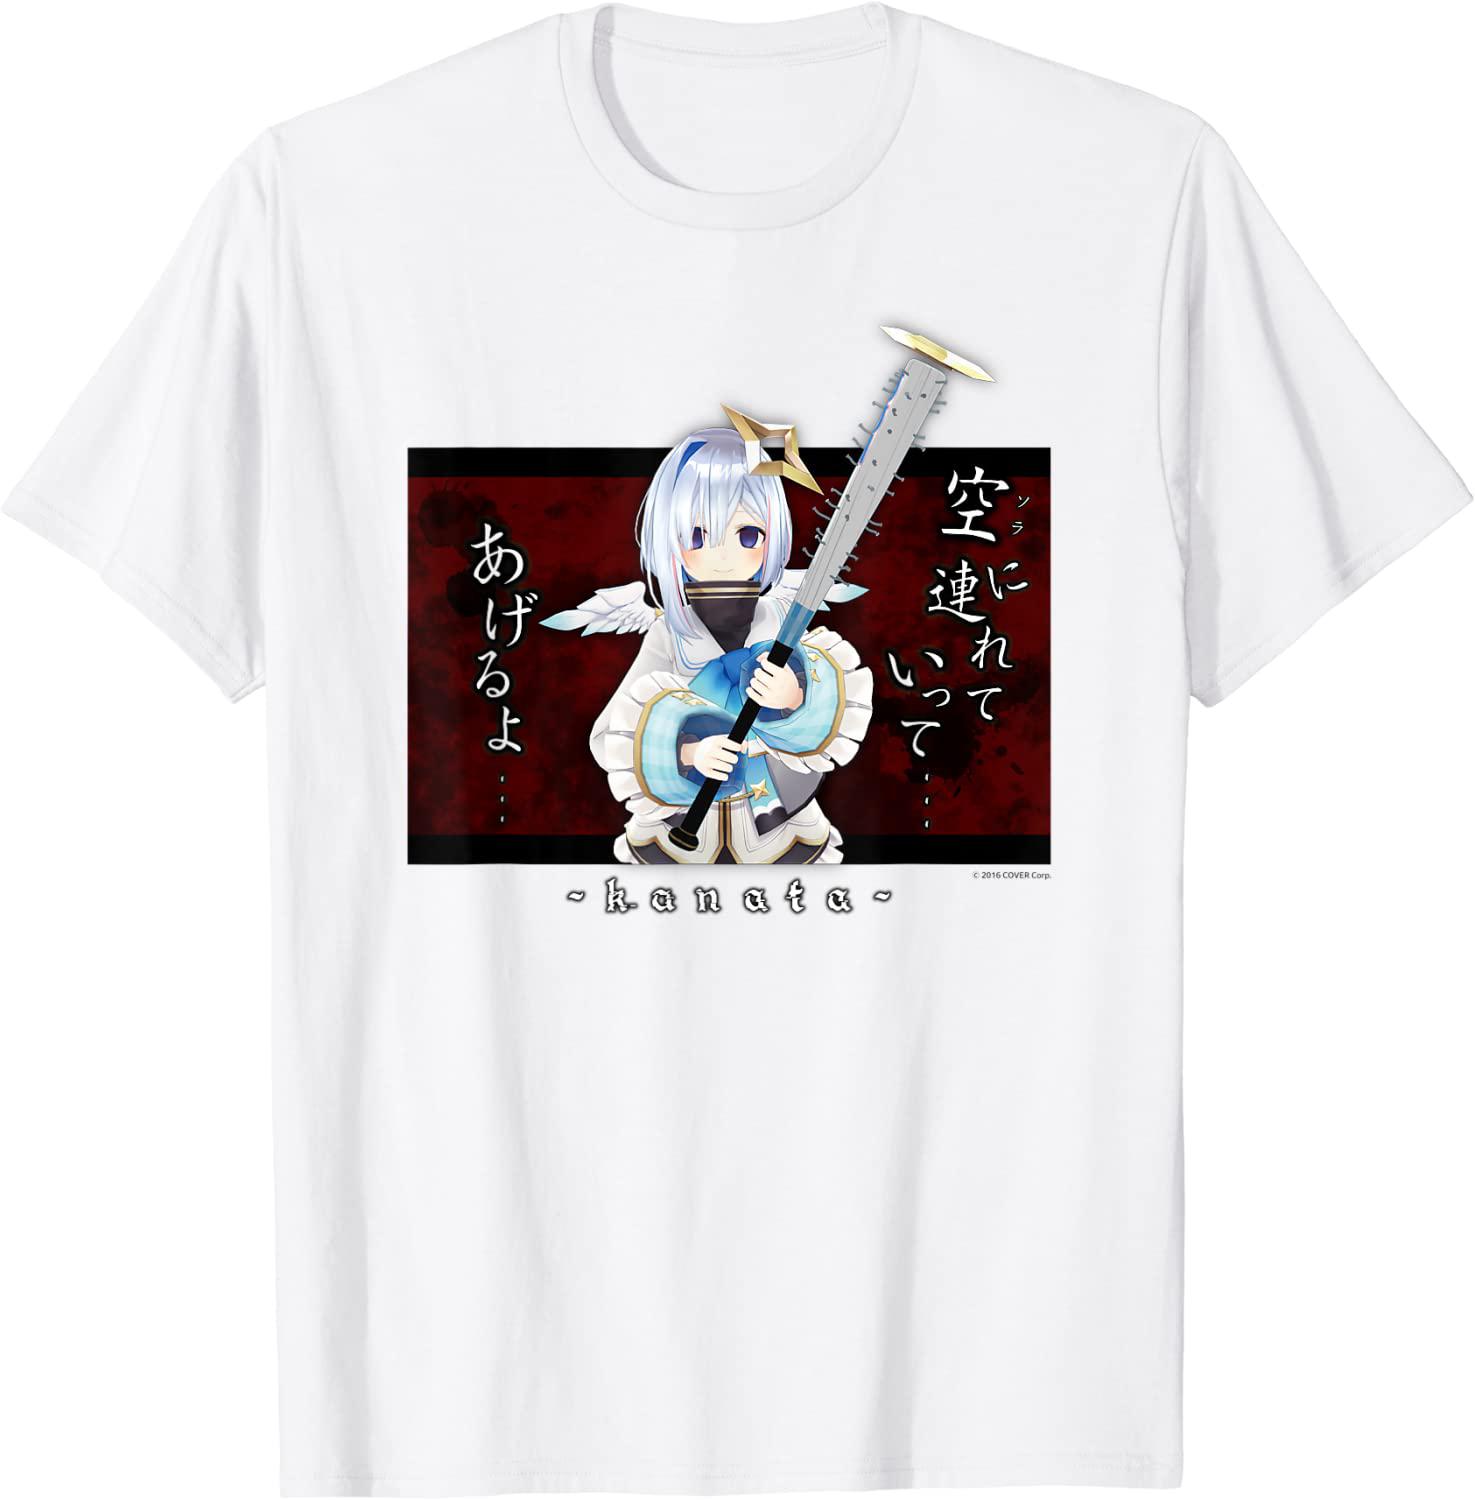 Hololive - Merch By Amazon T-shirt - Hologura - Amane Kanata